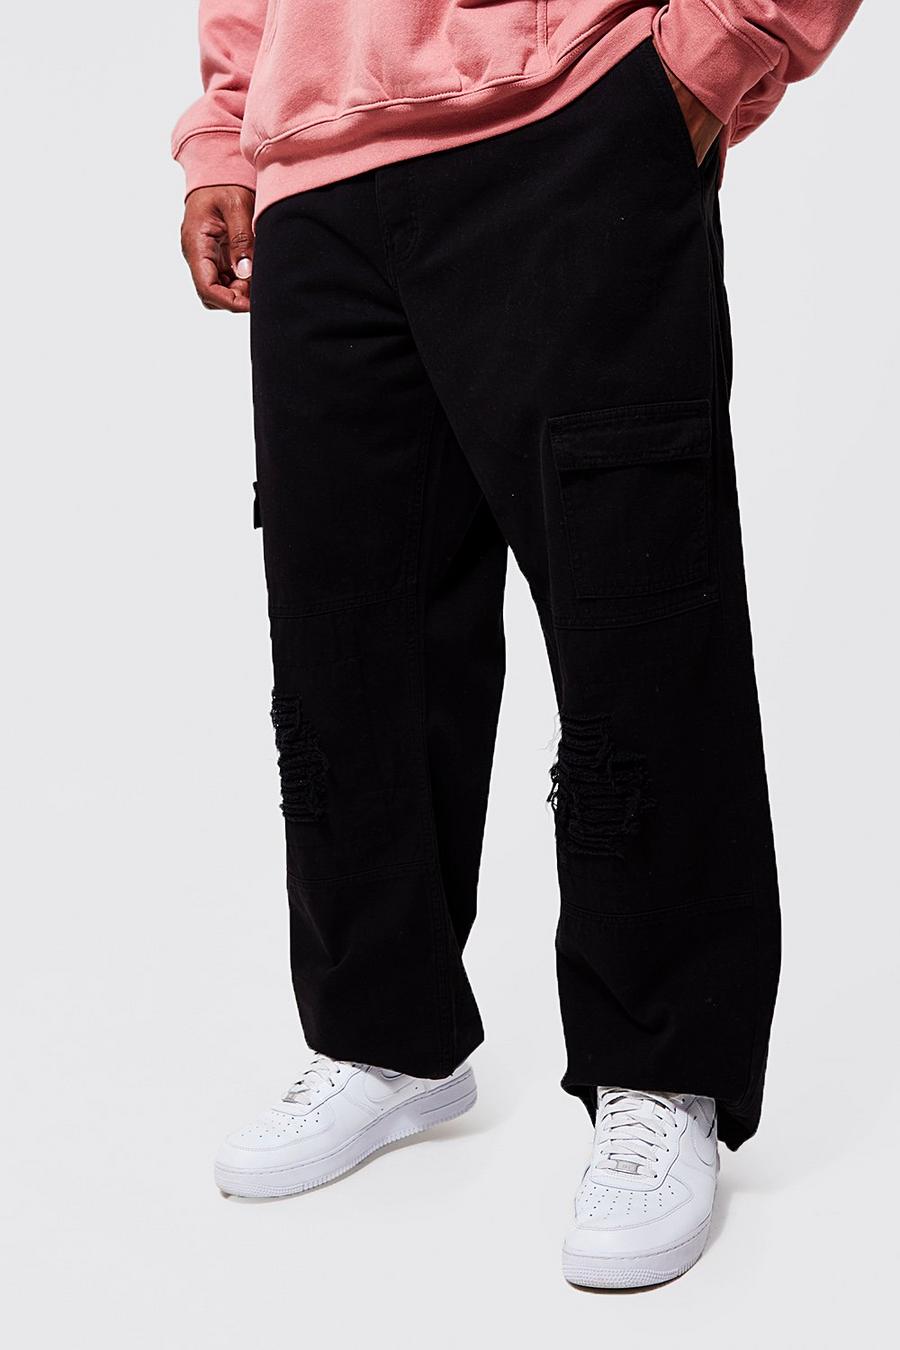 Black negro מכנסי דגמ'ח בגזרה ישרה עם קרעים, מידות גדולות